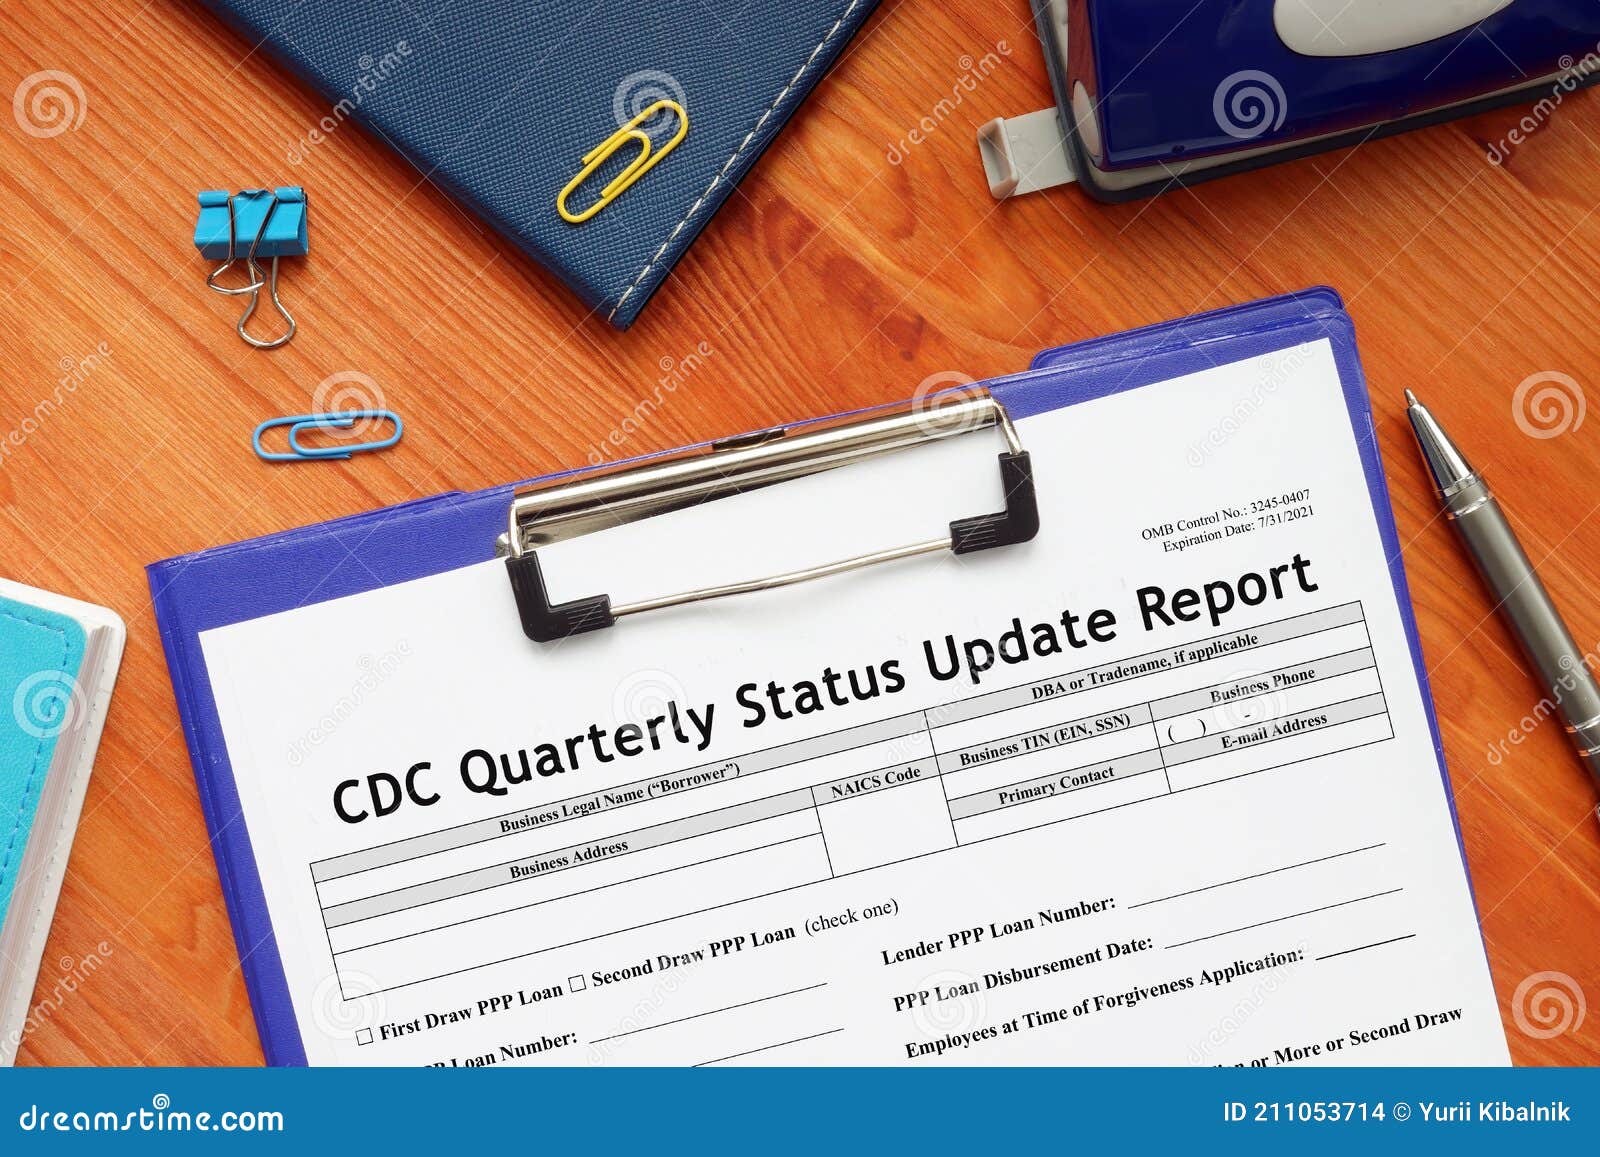 sba form cdc quarterly status update report certified development company